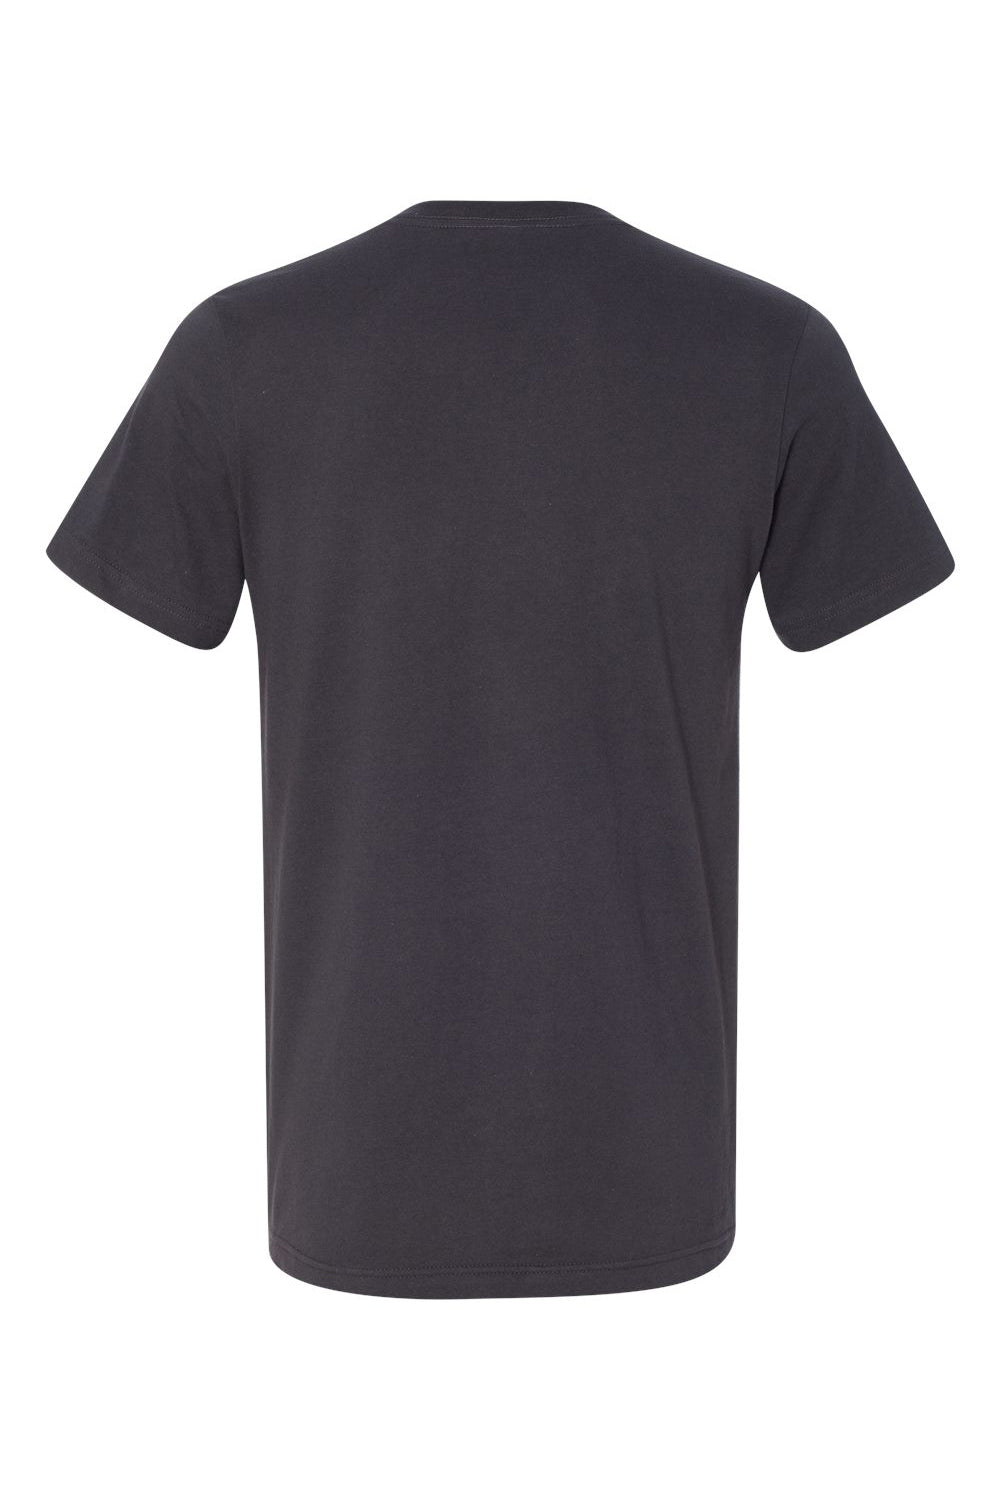 Bella + Canvas BC3005/3005/3655C Mens Jersey Short Sleeve V-Neck T-Shirt Dark Grey Flat Back